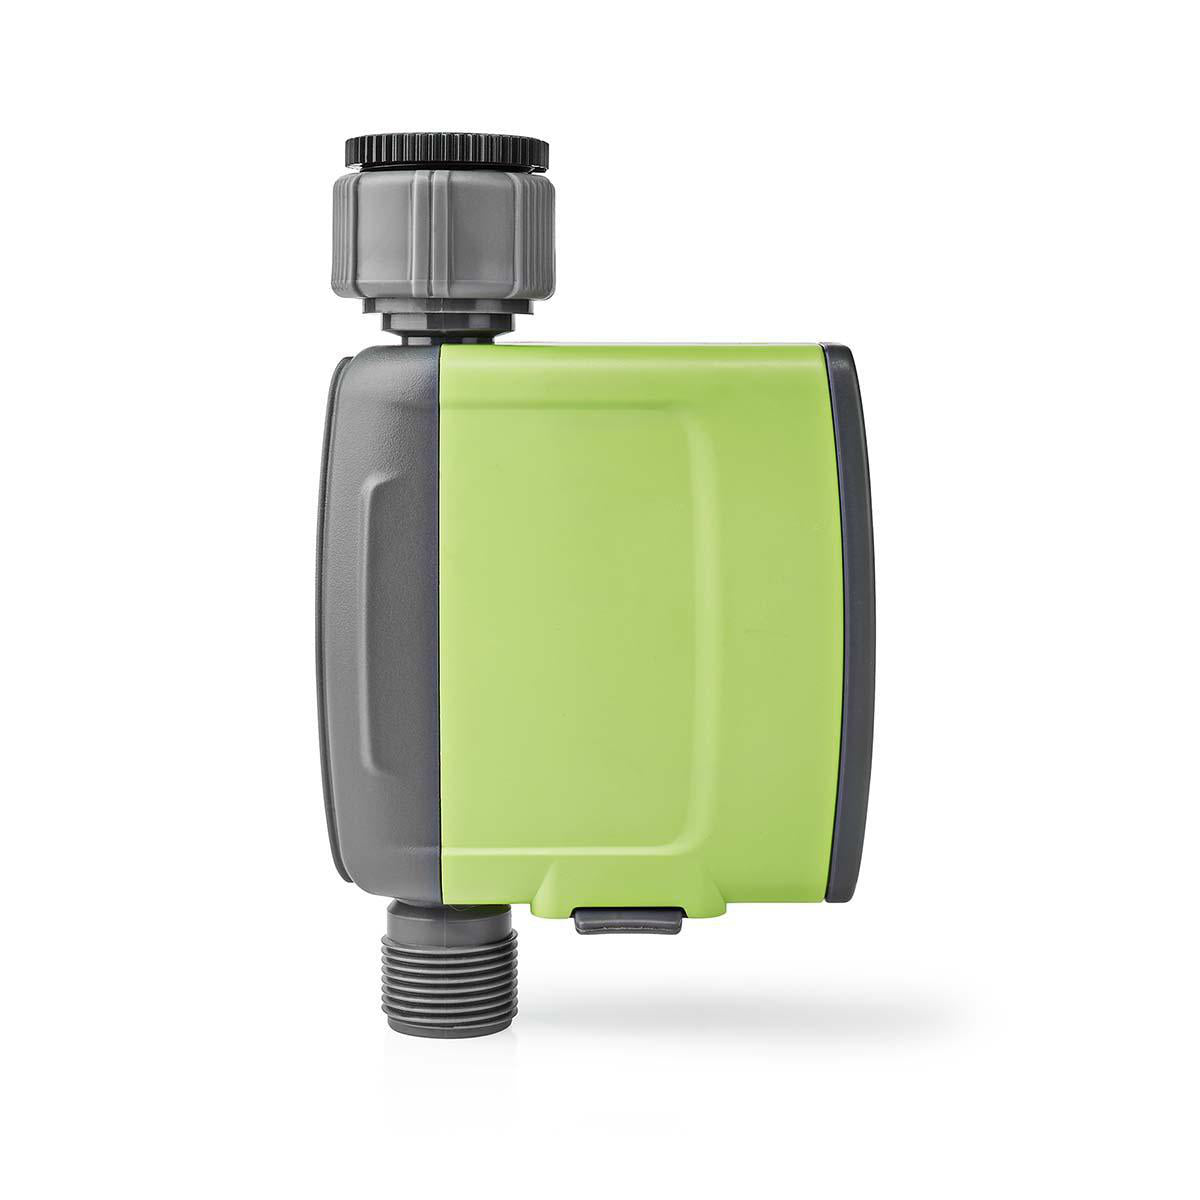 SmartLife Intelligente Wassersteuerung Smart Home Bewässerungssteuerung App